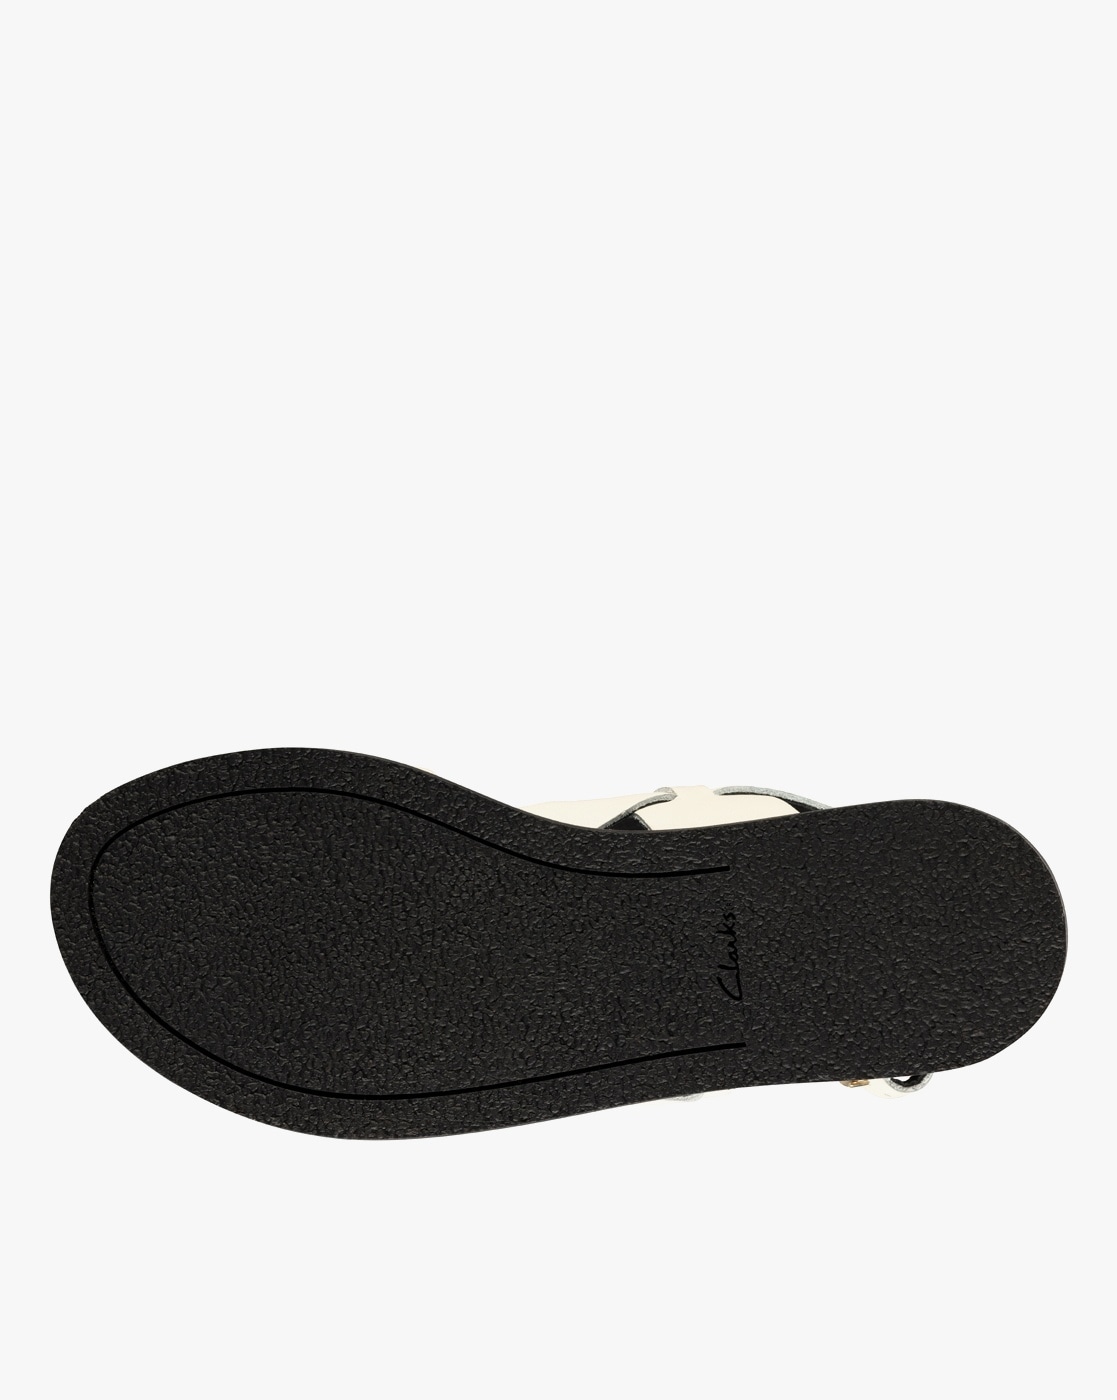 Clarks Womens Tan Leather Flats Slip On Slide Sandals Shoes Size 6 | eBay